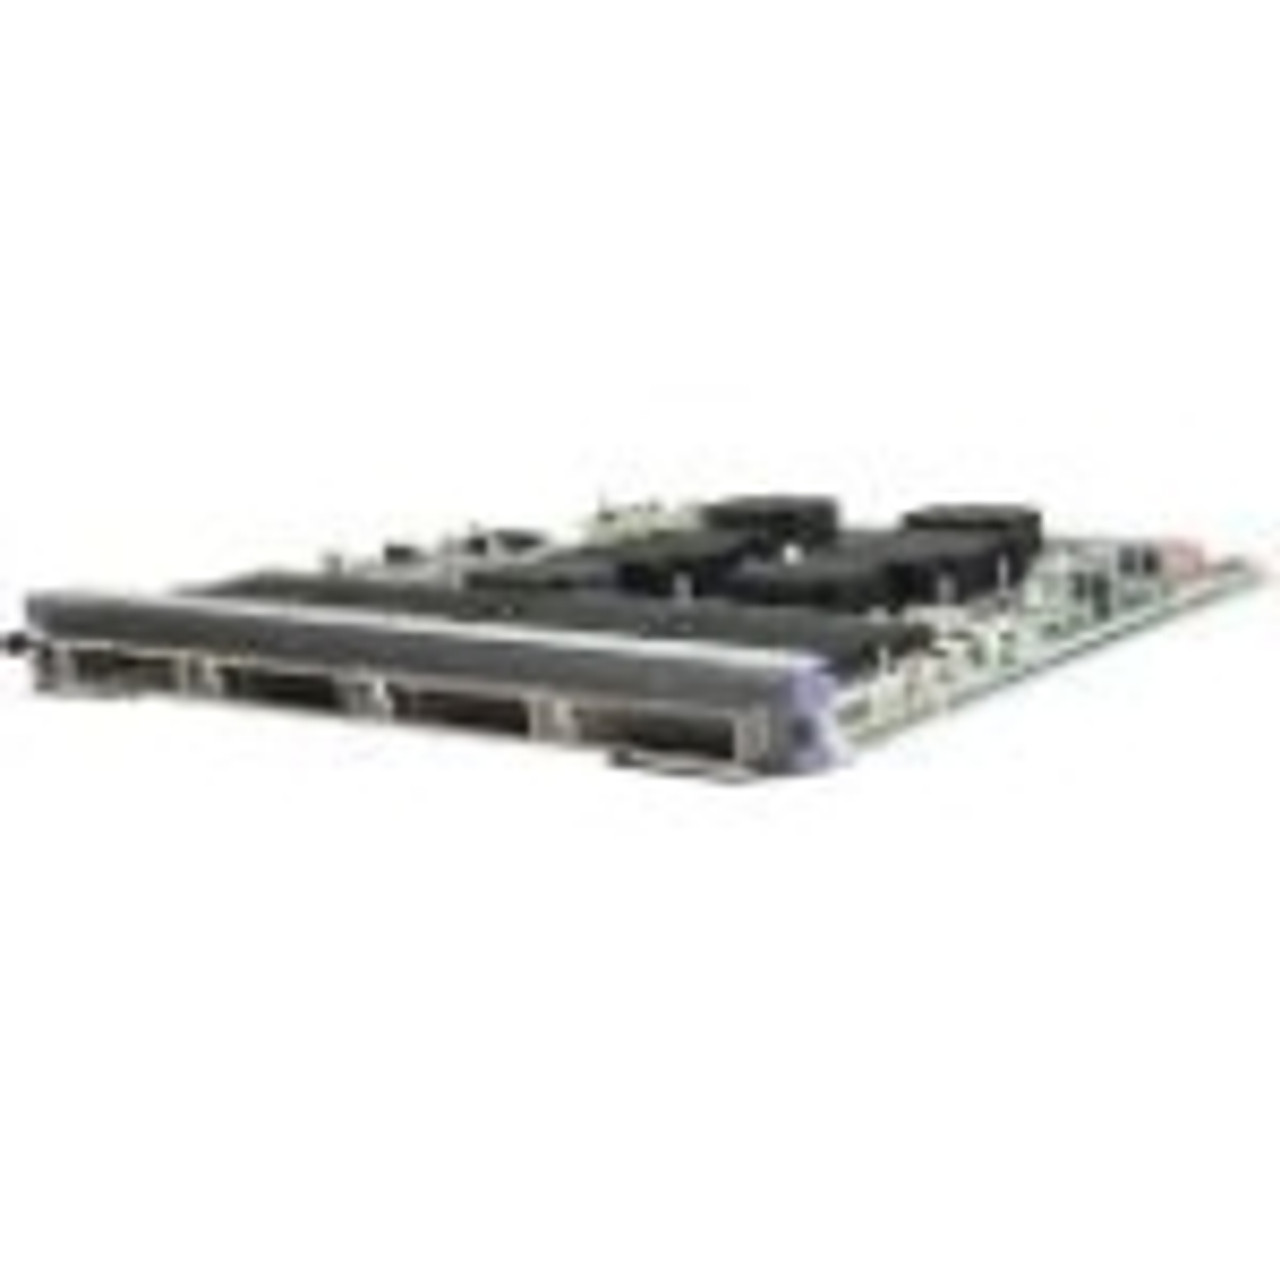 JG788AR HP FlexFabric 12500 4-Port 100GbE CFP FG Module For Data Networking, Optical Network4 x Expansion Slots CFP